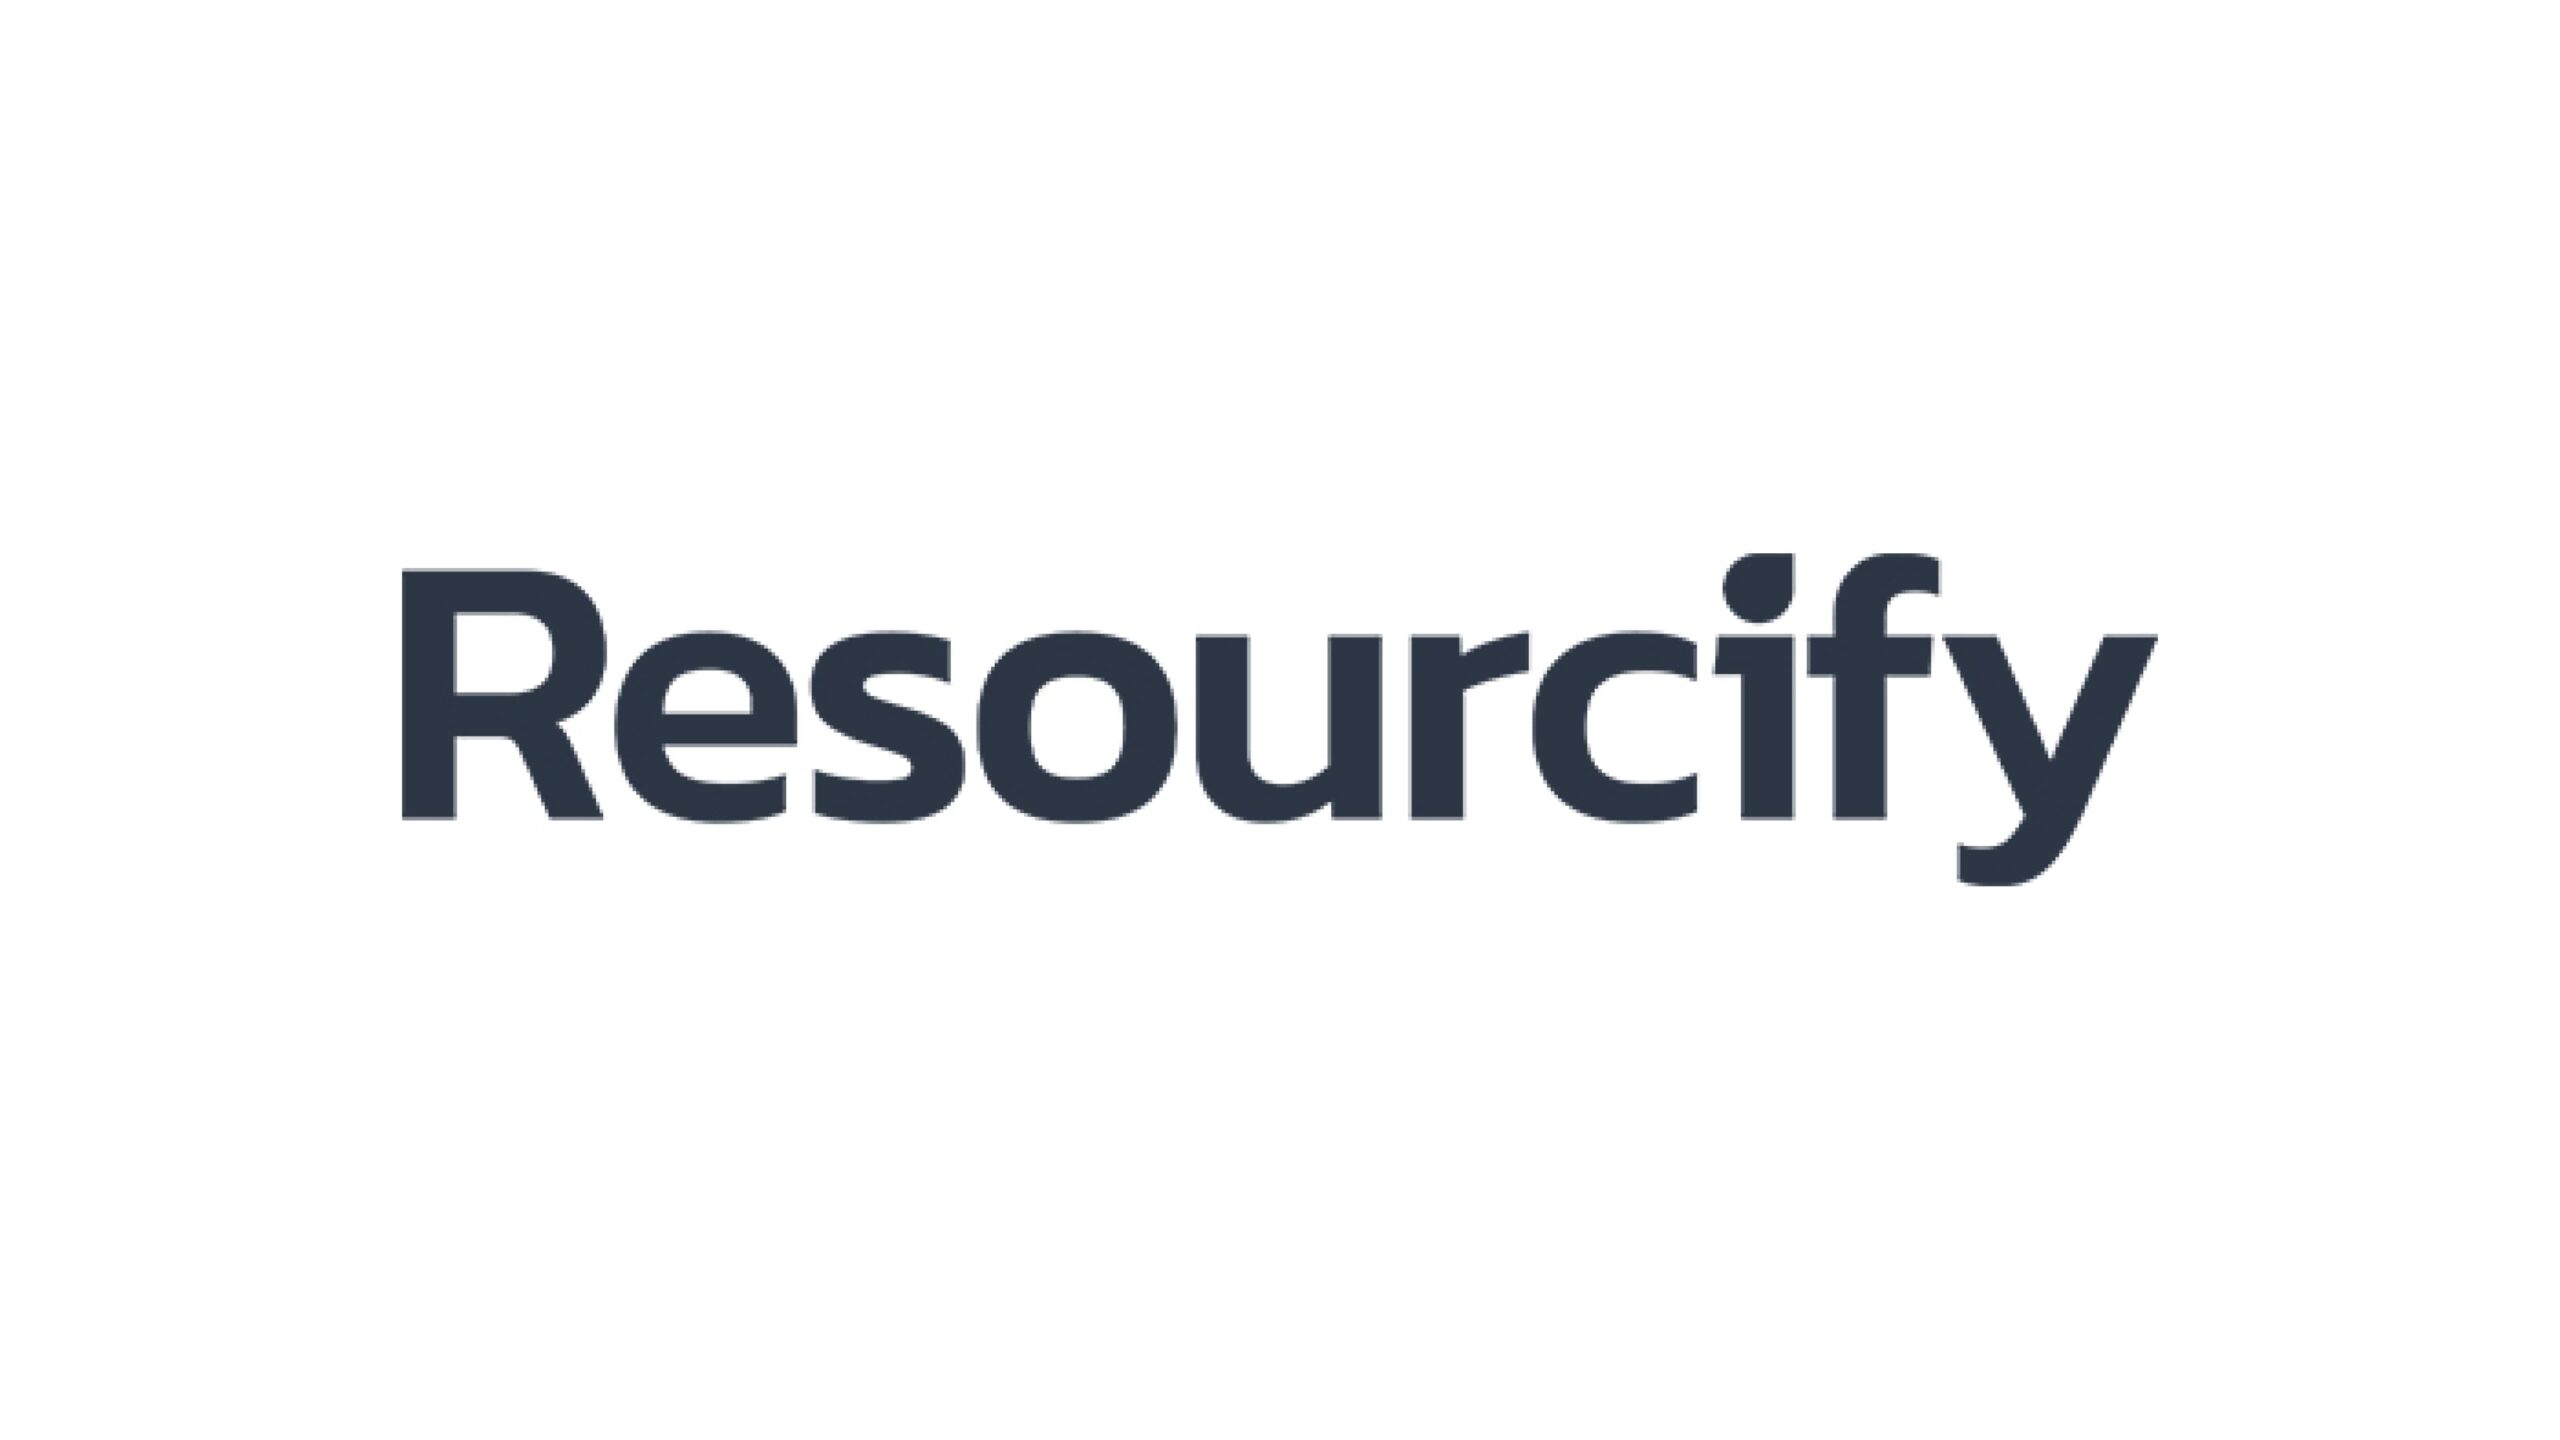 Resourcify, デジタル化された廃棄物管理プラットフォーム、1,400万ユーロ調達